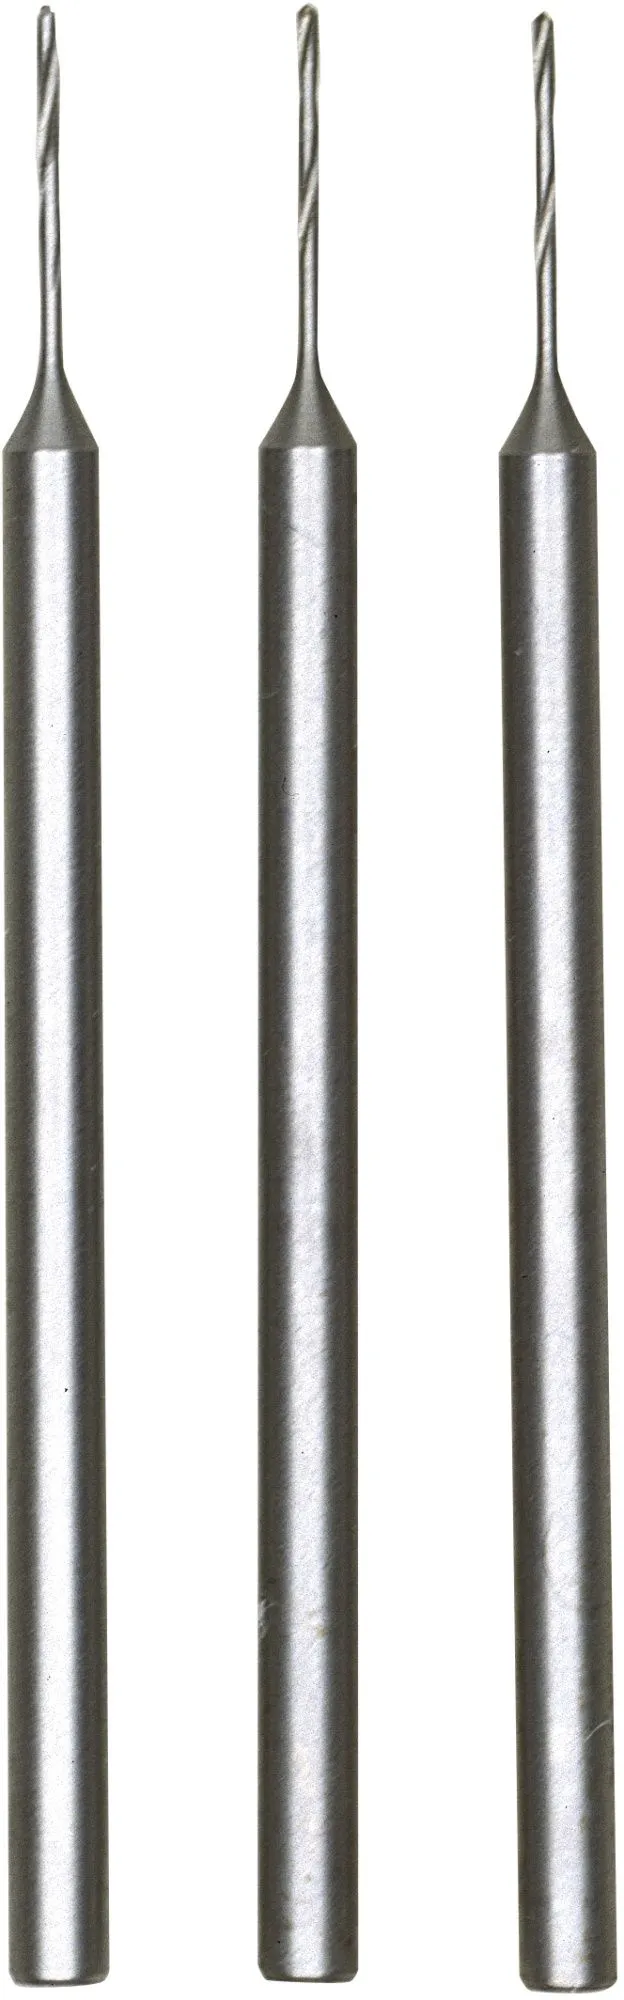 Вольфрам-ванадиевые свёрла 3шт 0.5мм PROXXON (28864)